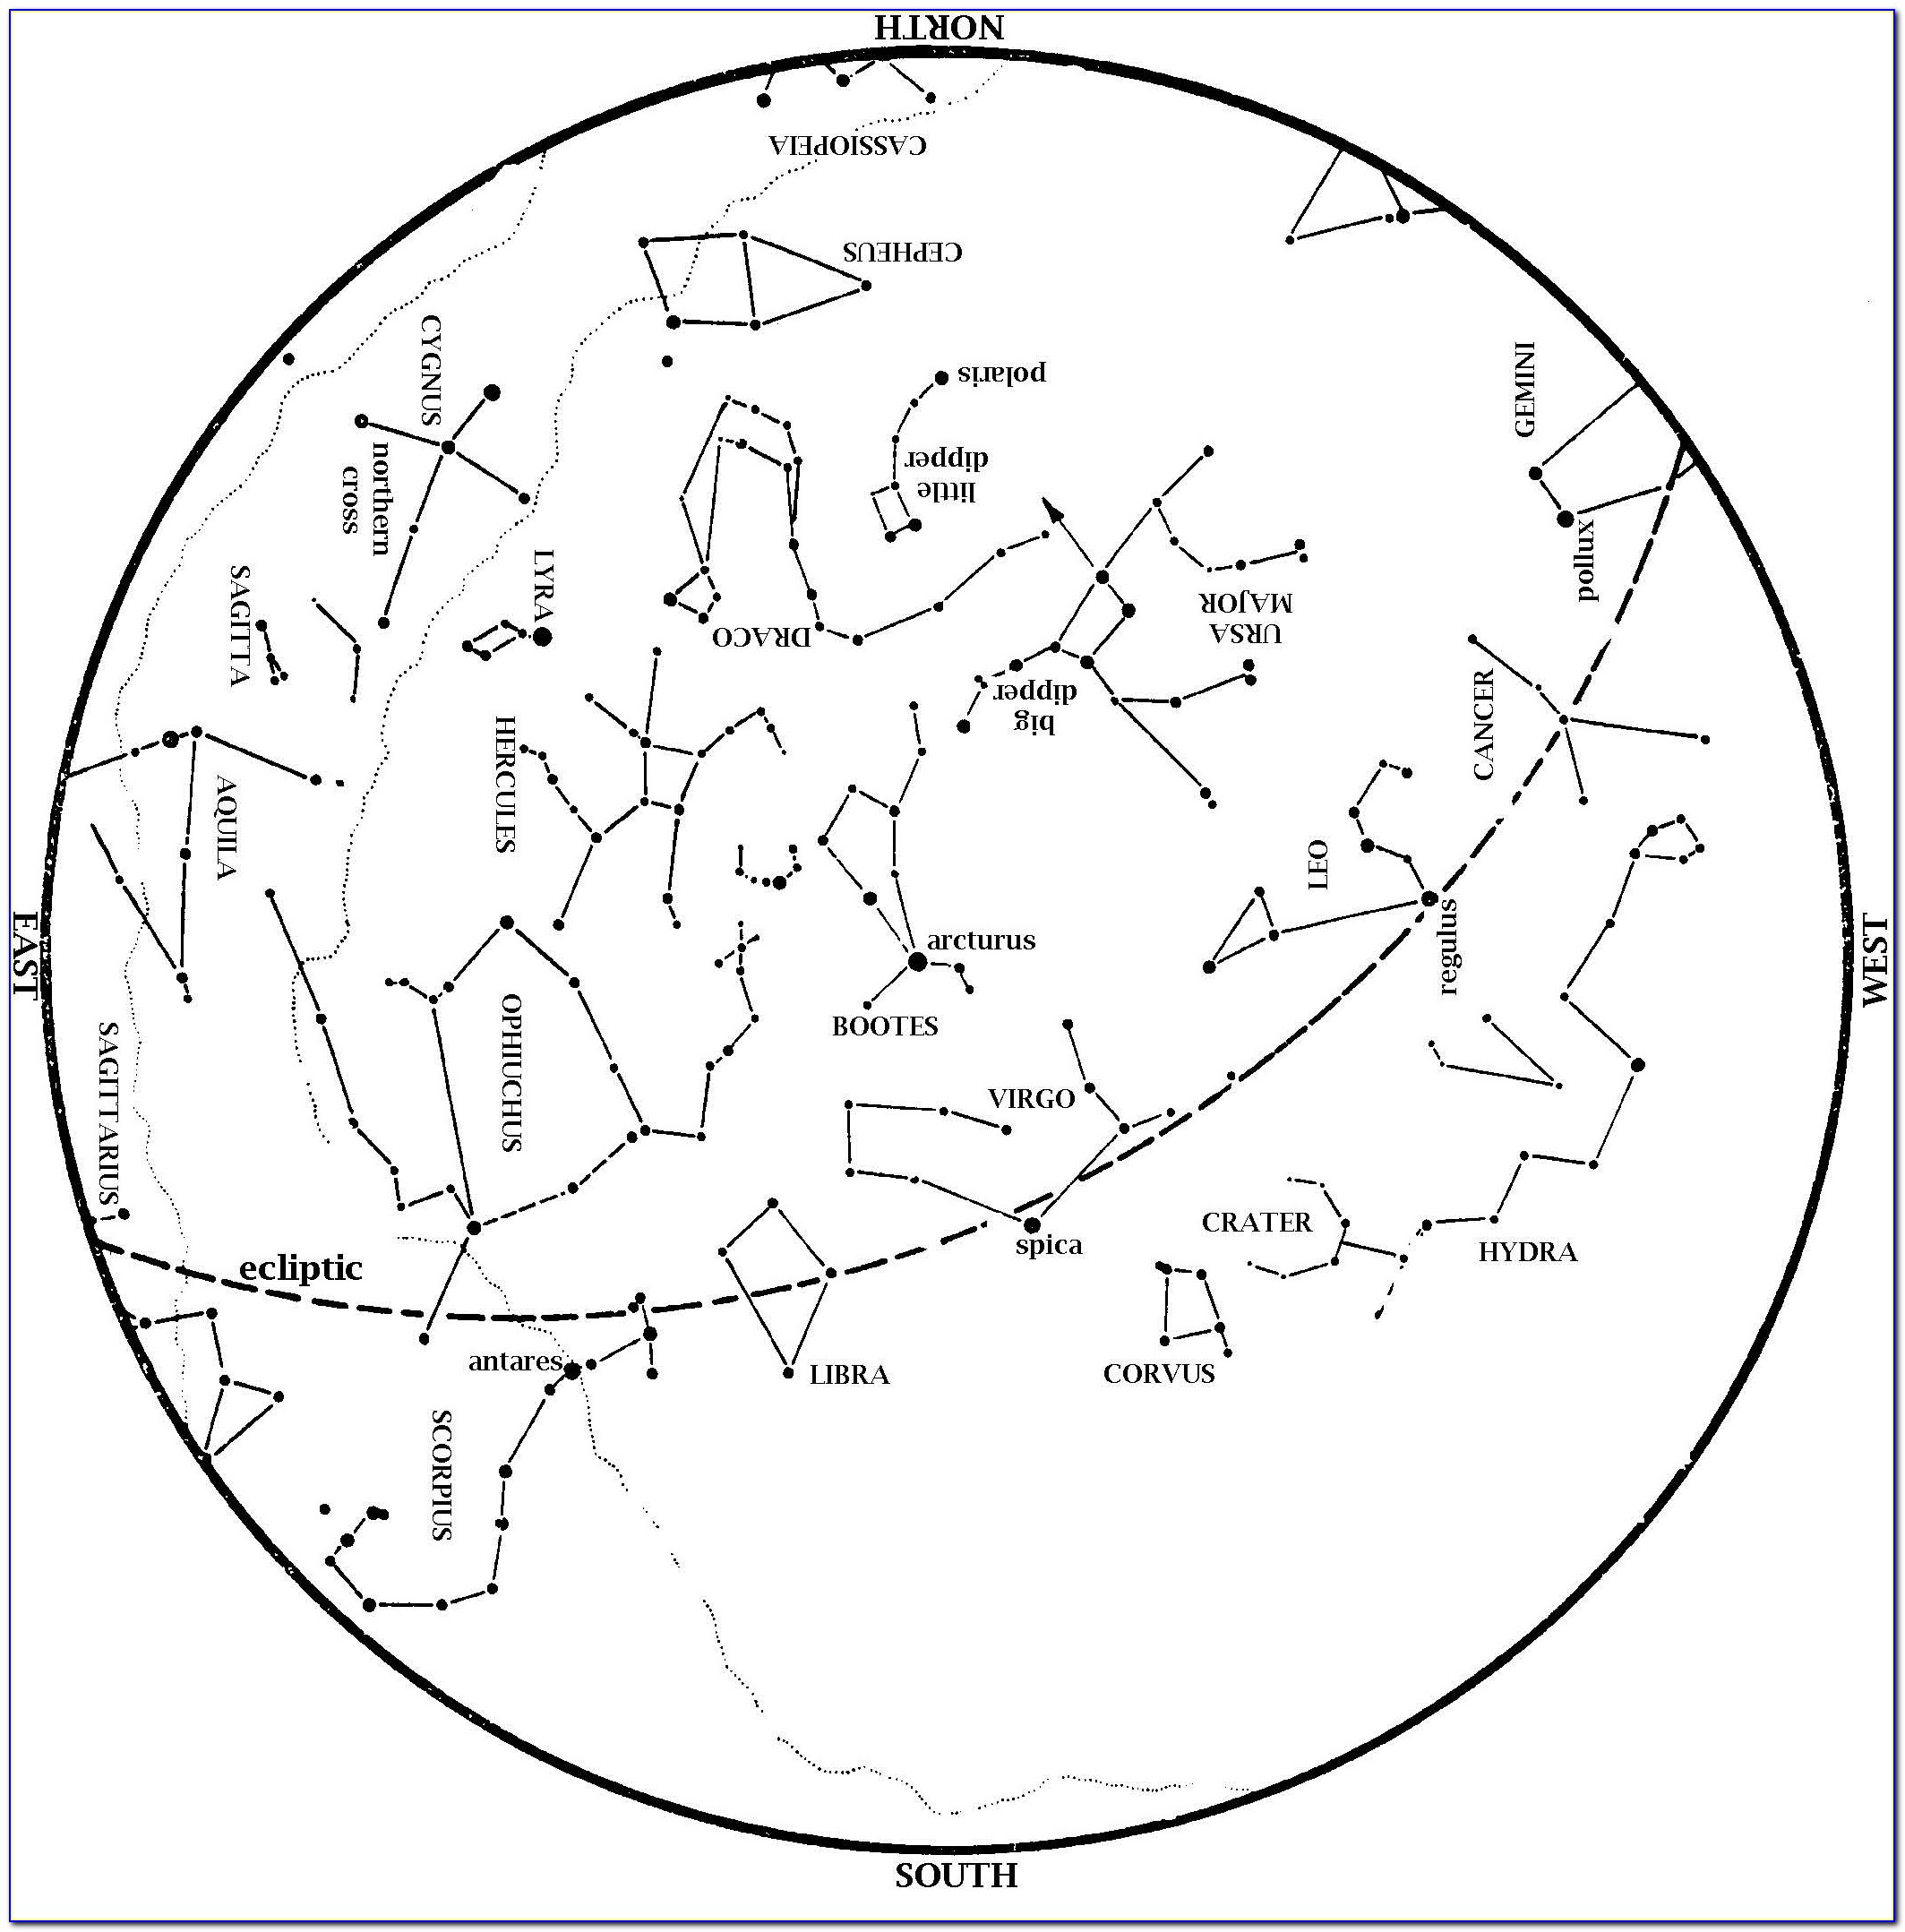 Star Map Southern Hemisphere Tonight